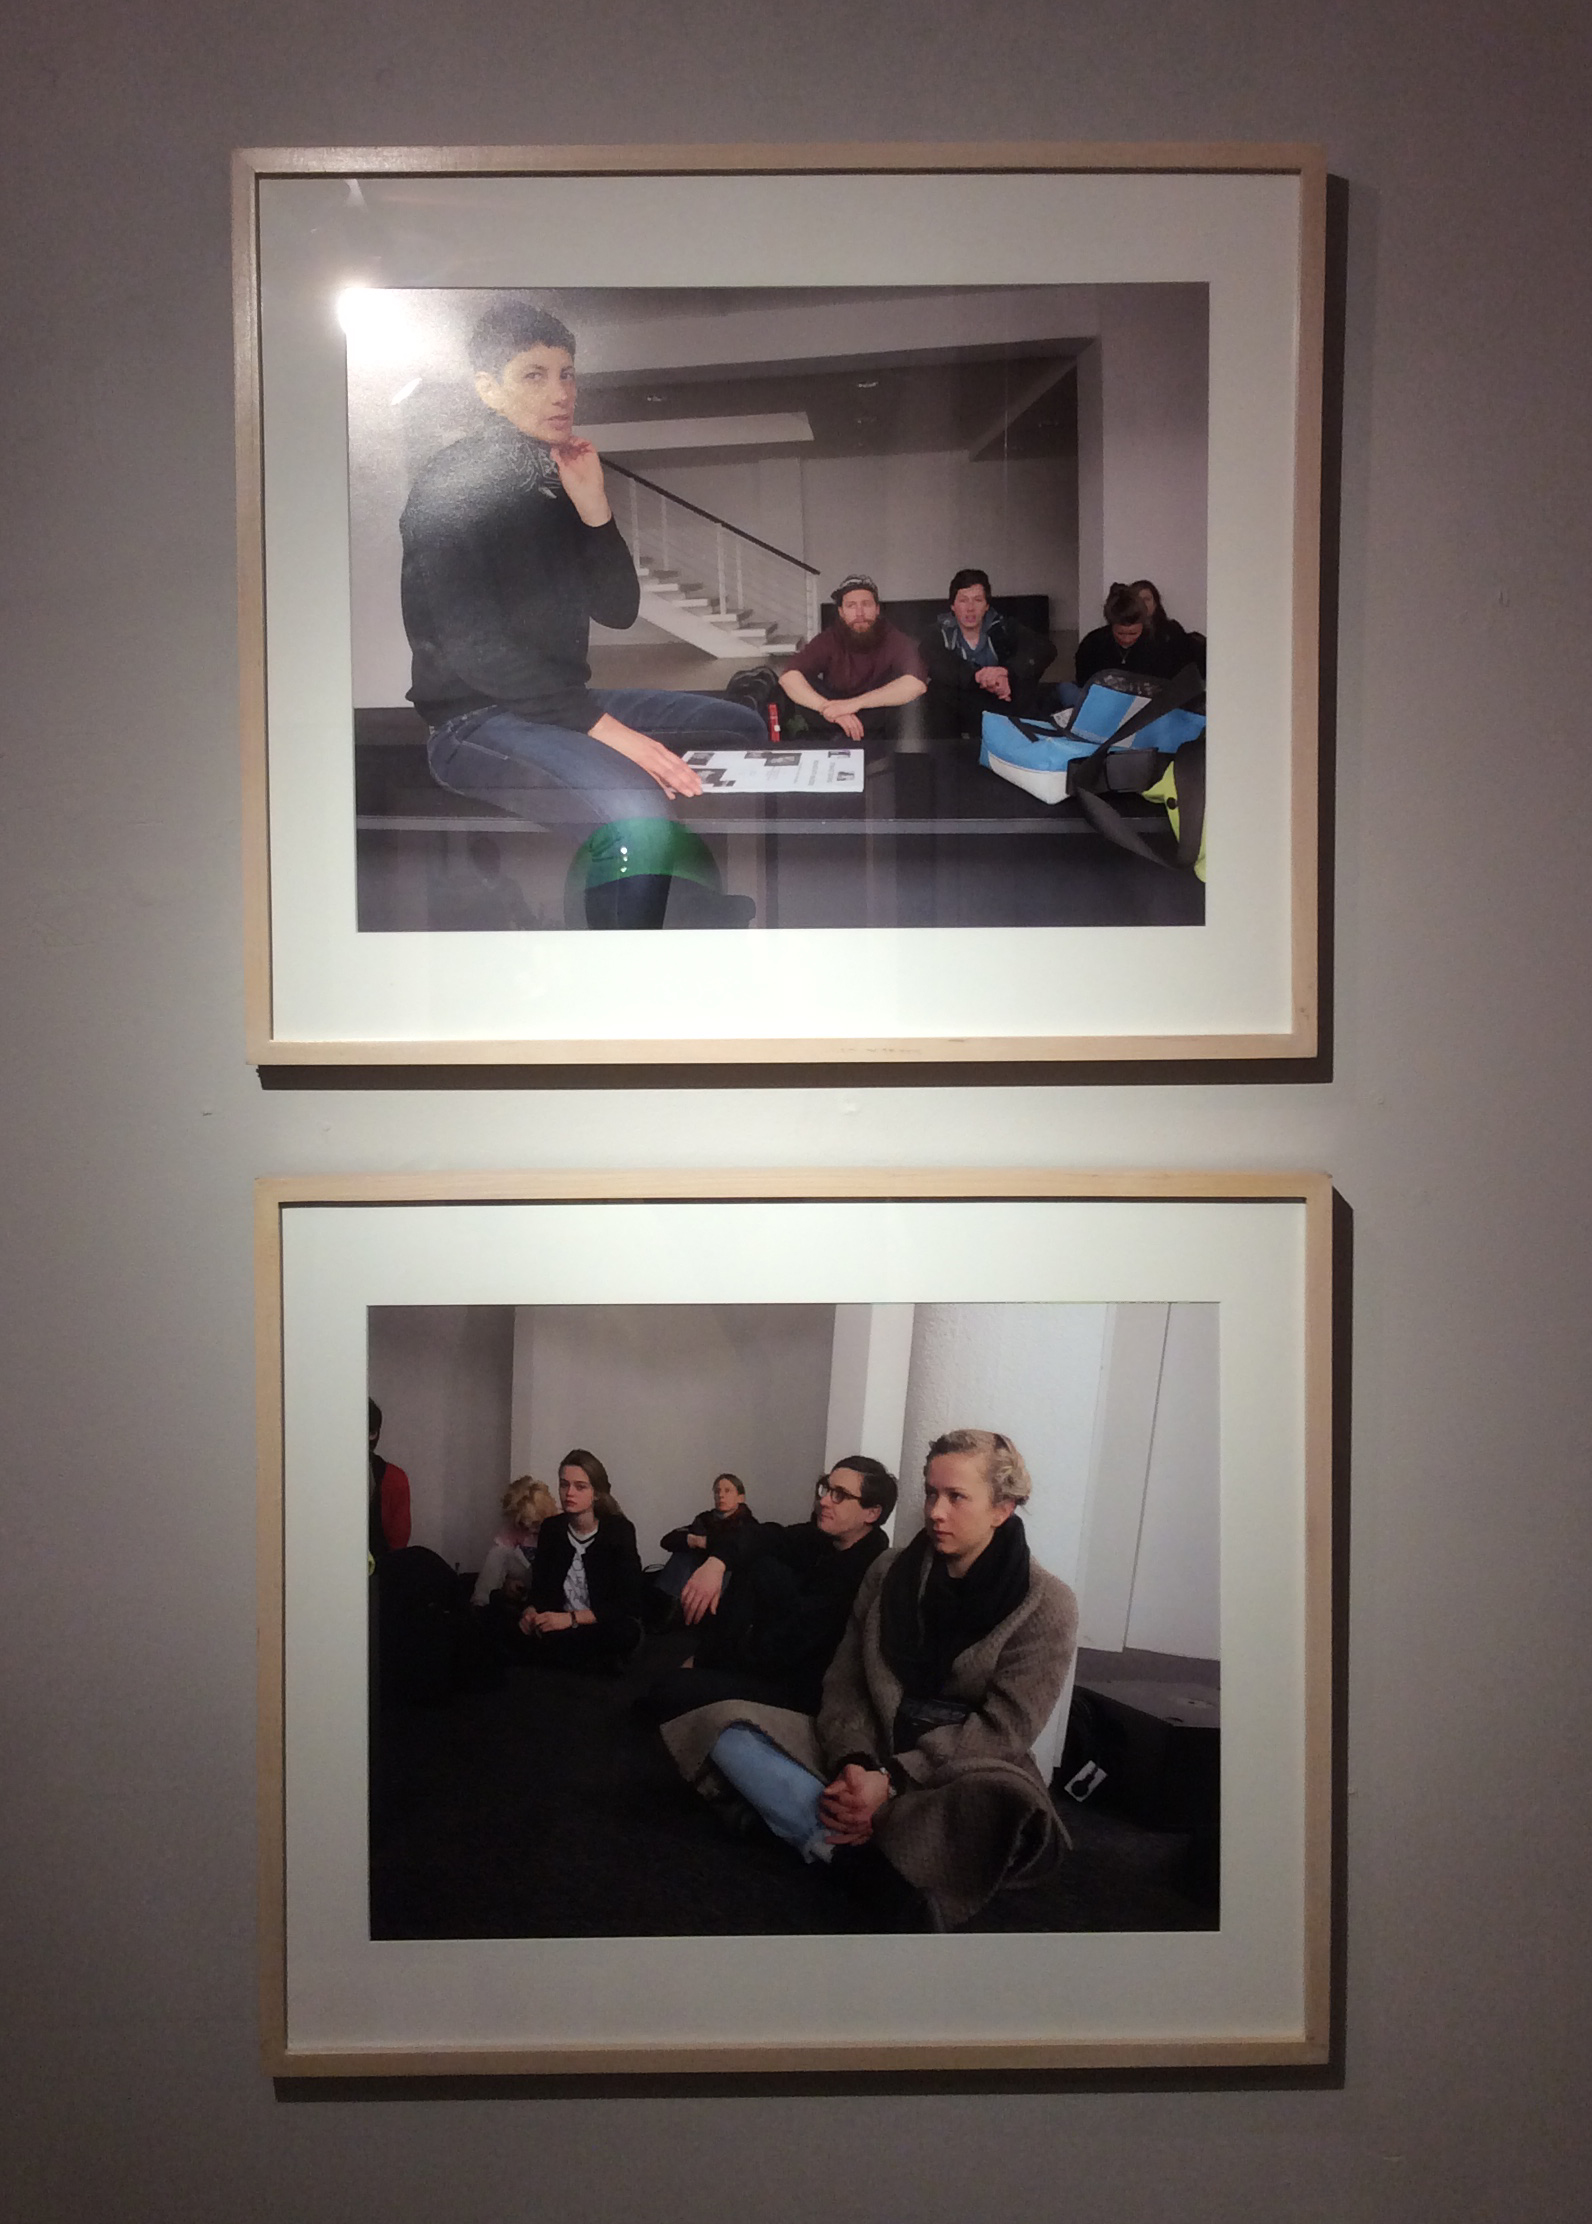   Rainer Ganahl; S/L, Yael Bartana, Yael Bartana, Capitainpetzel, Berlin 2/27/2015;&nbsp;  4 photographs, 20" x 24", Edition of 4; 2015  